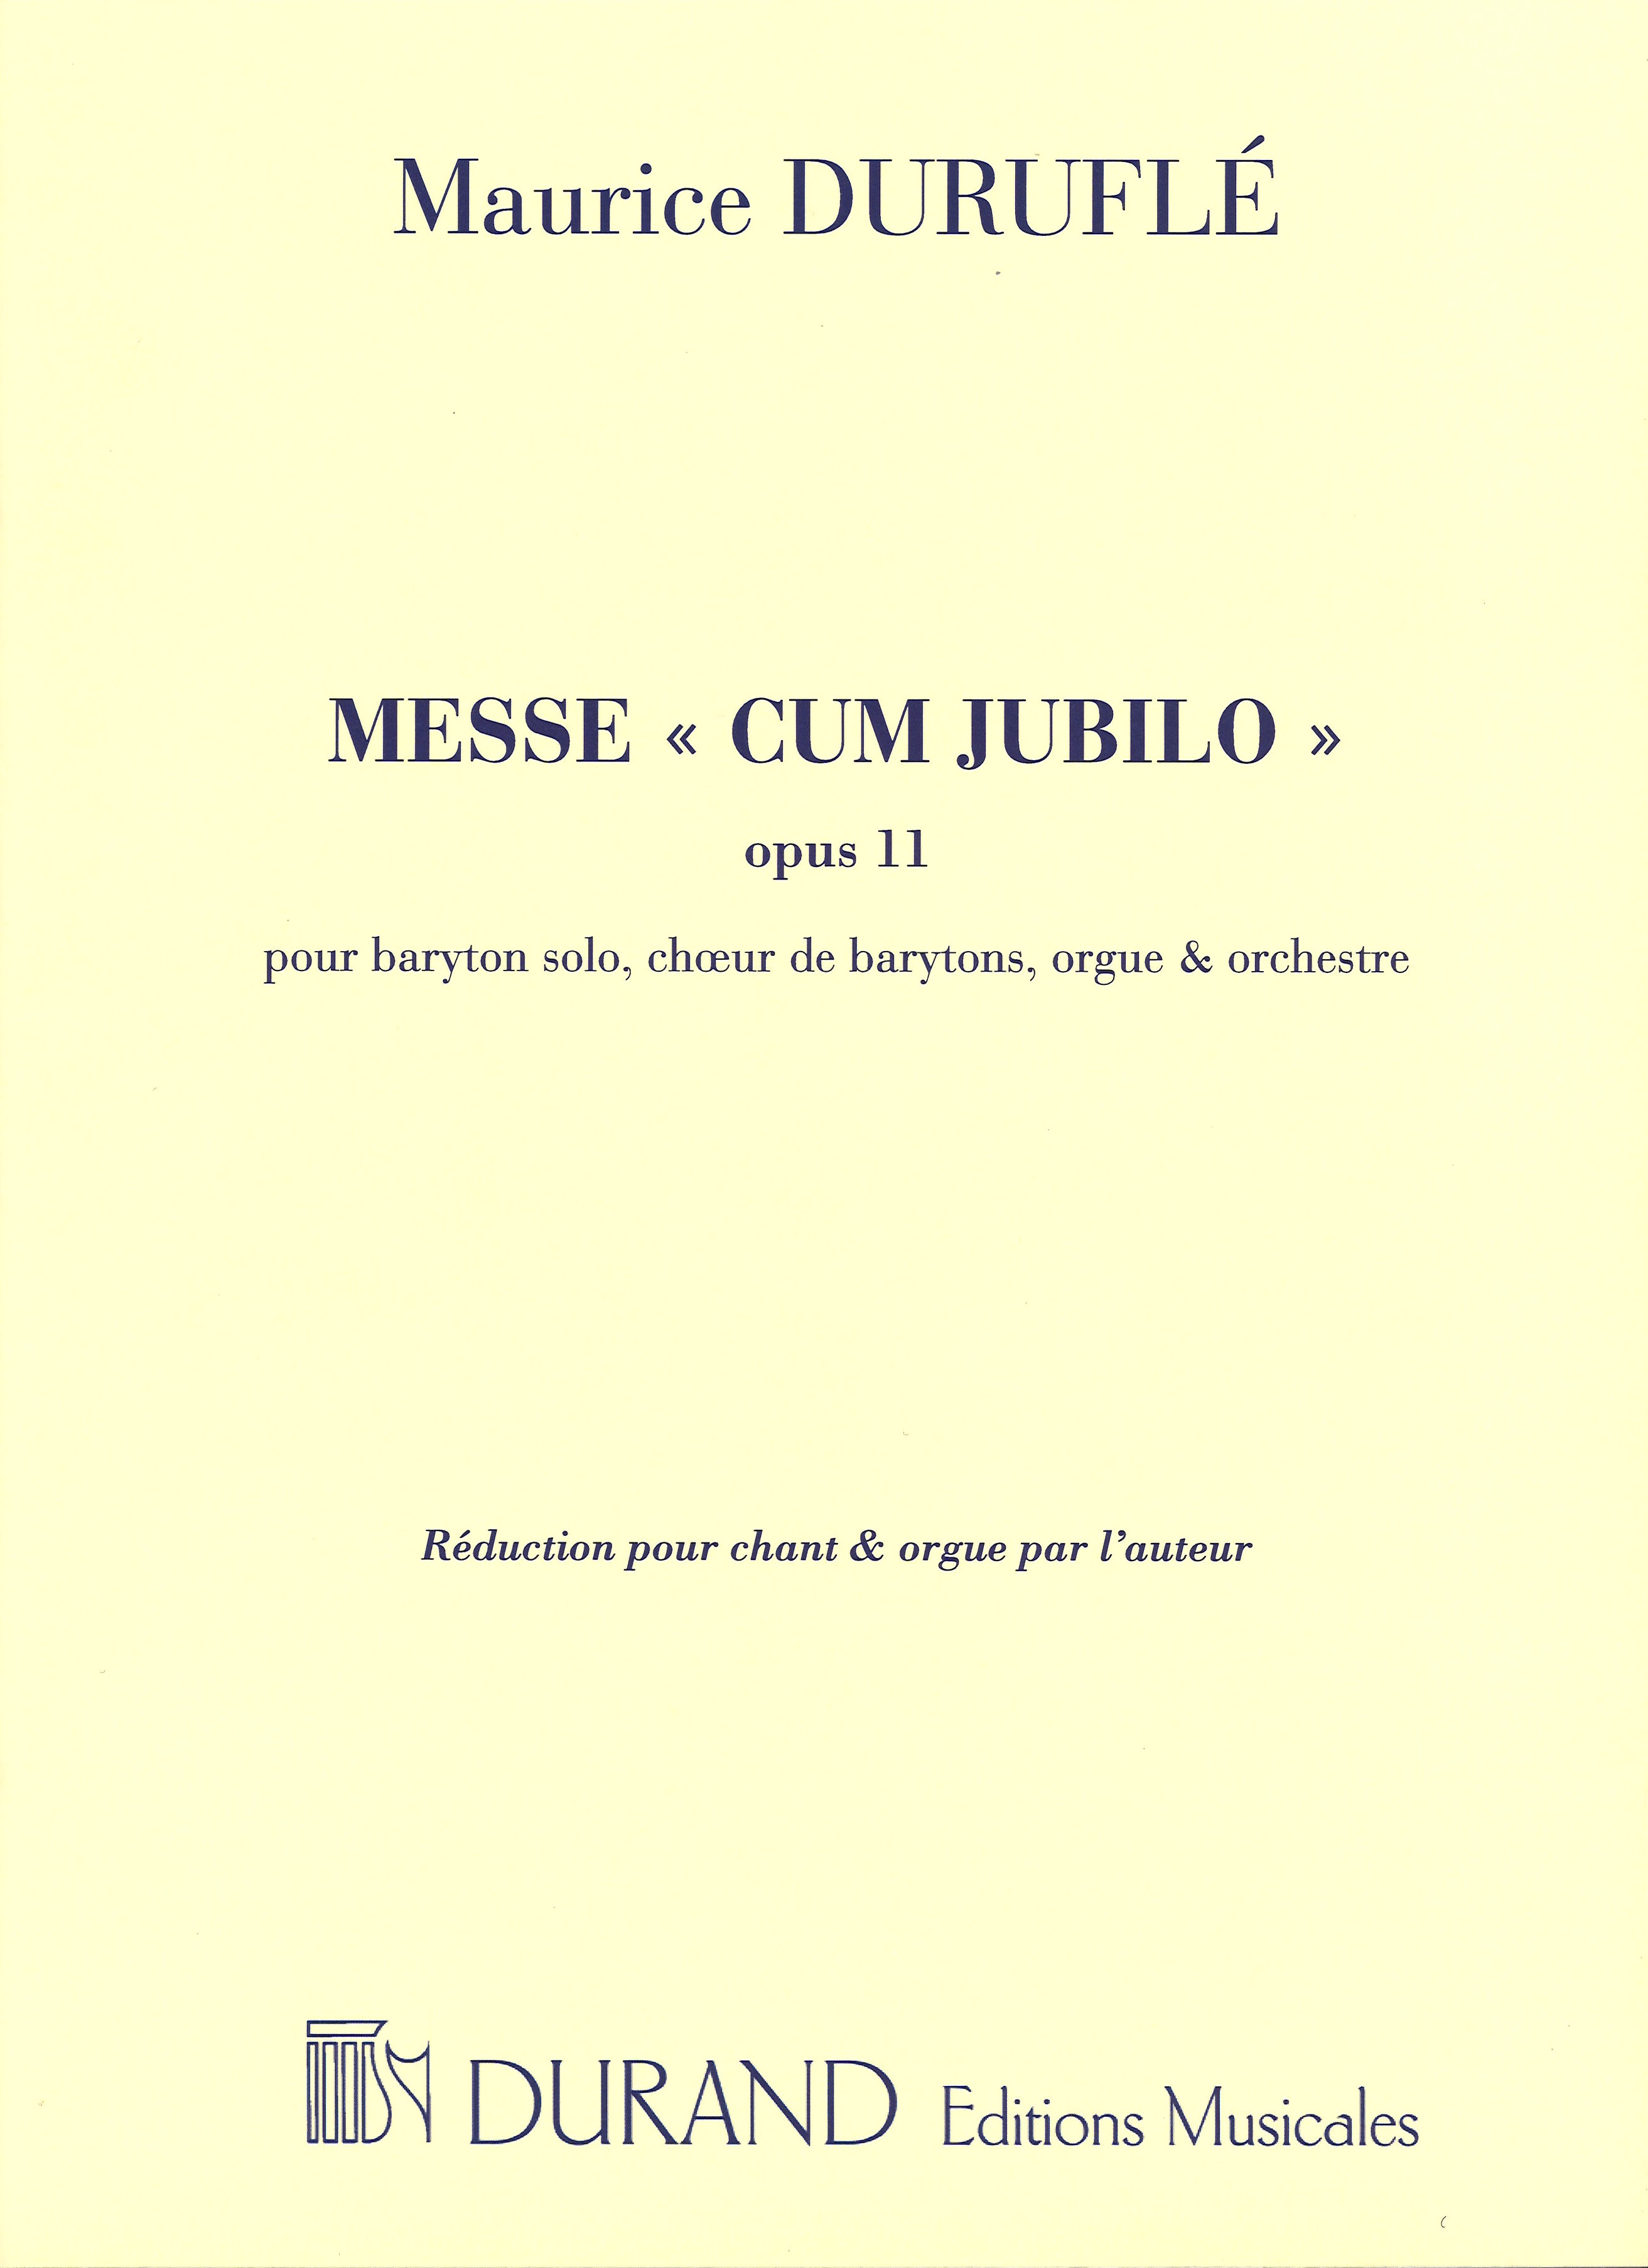 Durufle Messe Cum Jubilo Op11 Voice & Organ Sheet Music Songbook